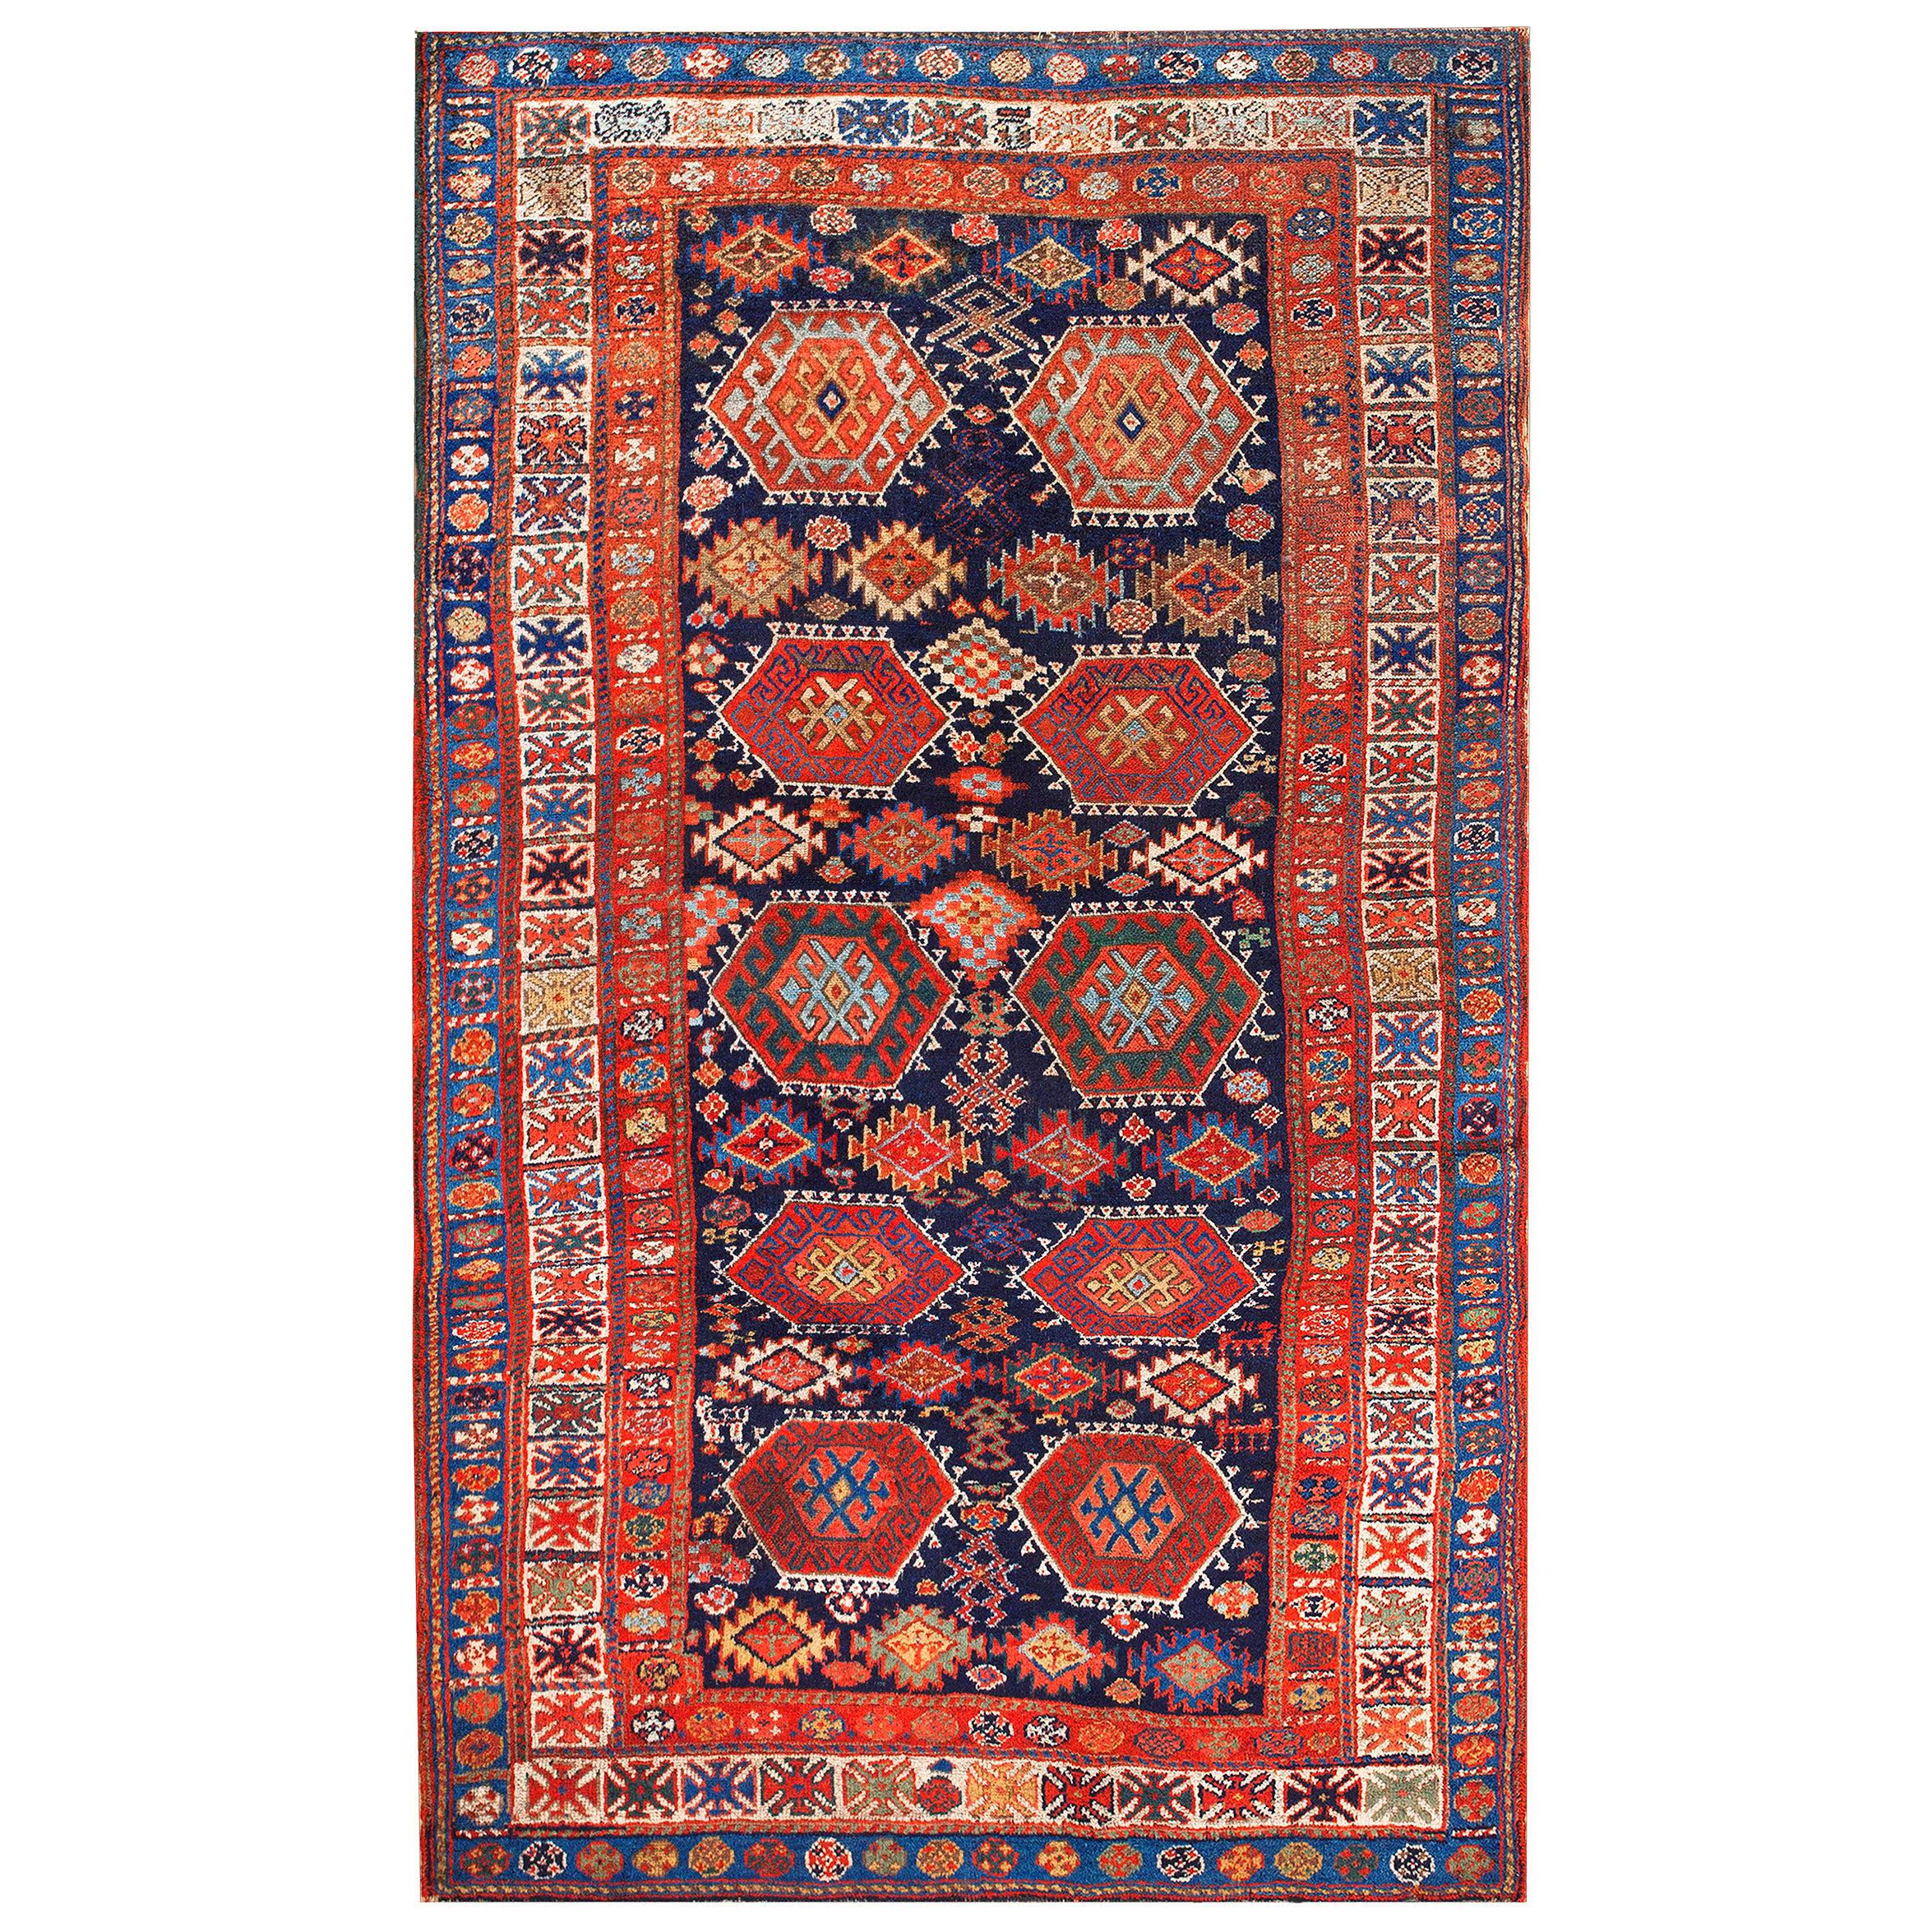 Antique Persian Tribal Rug